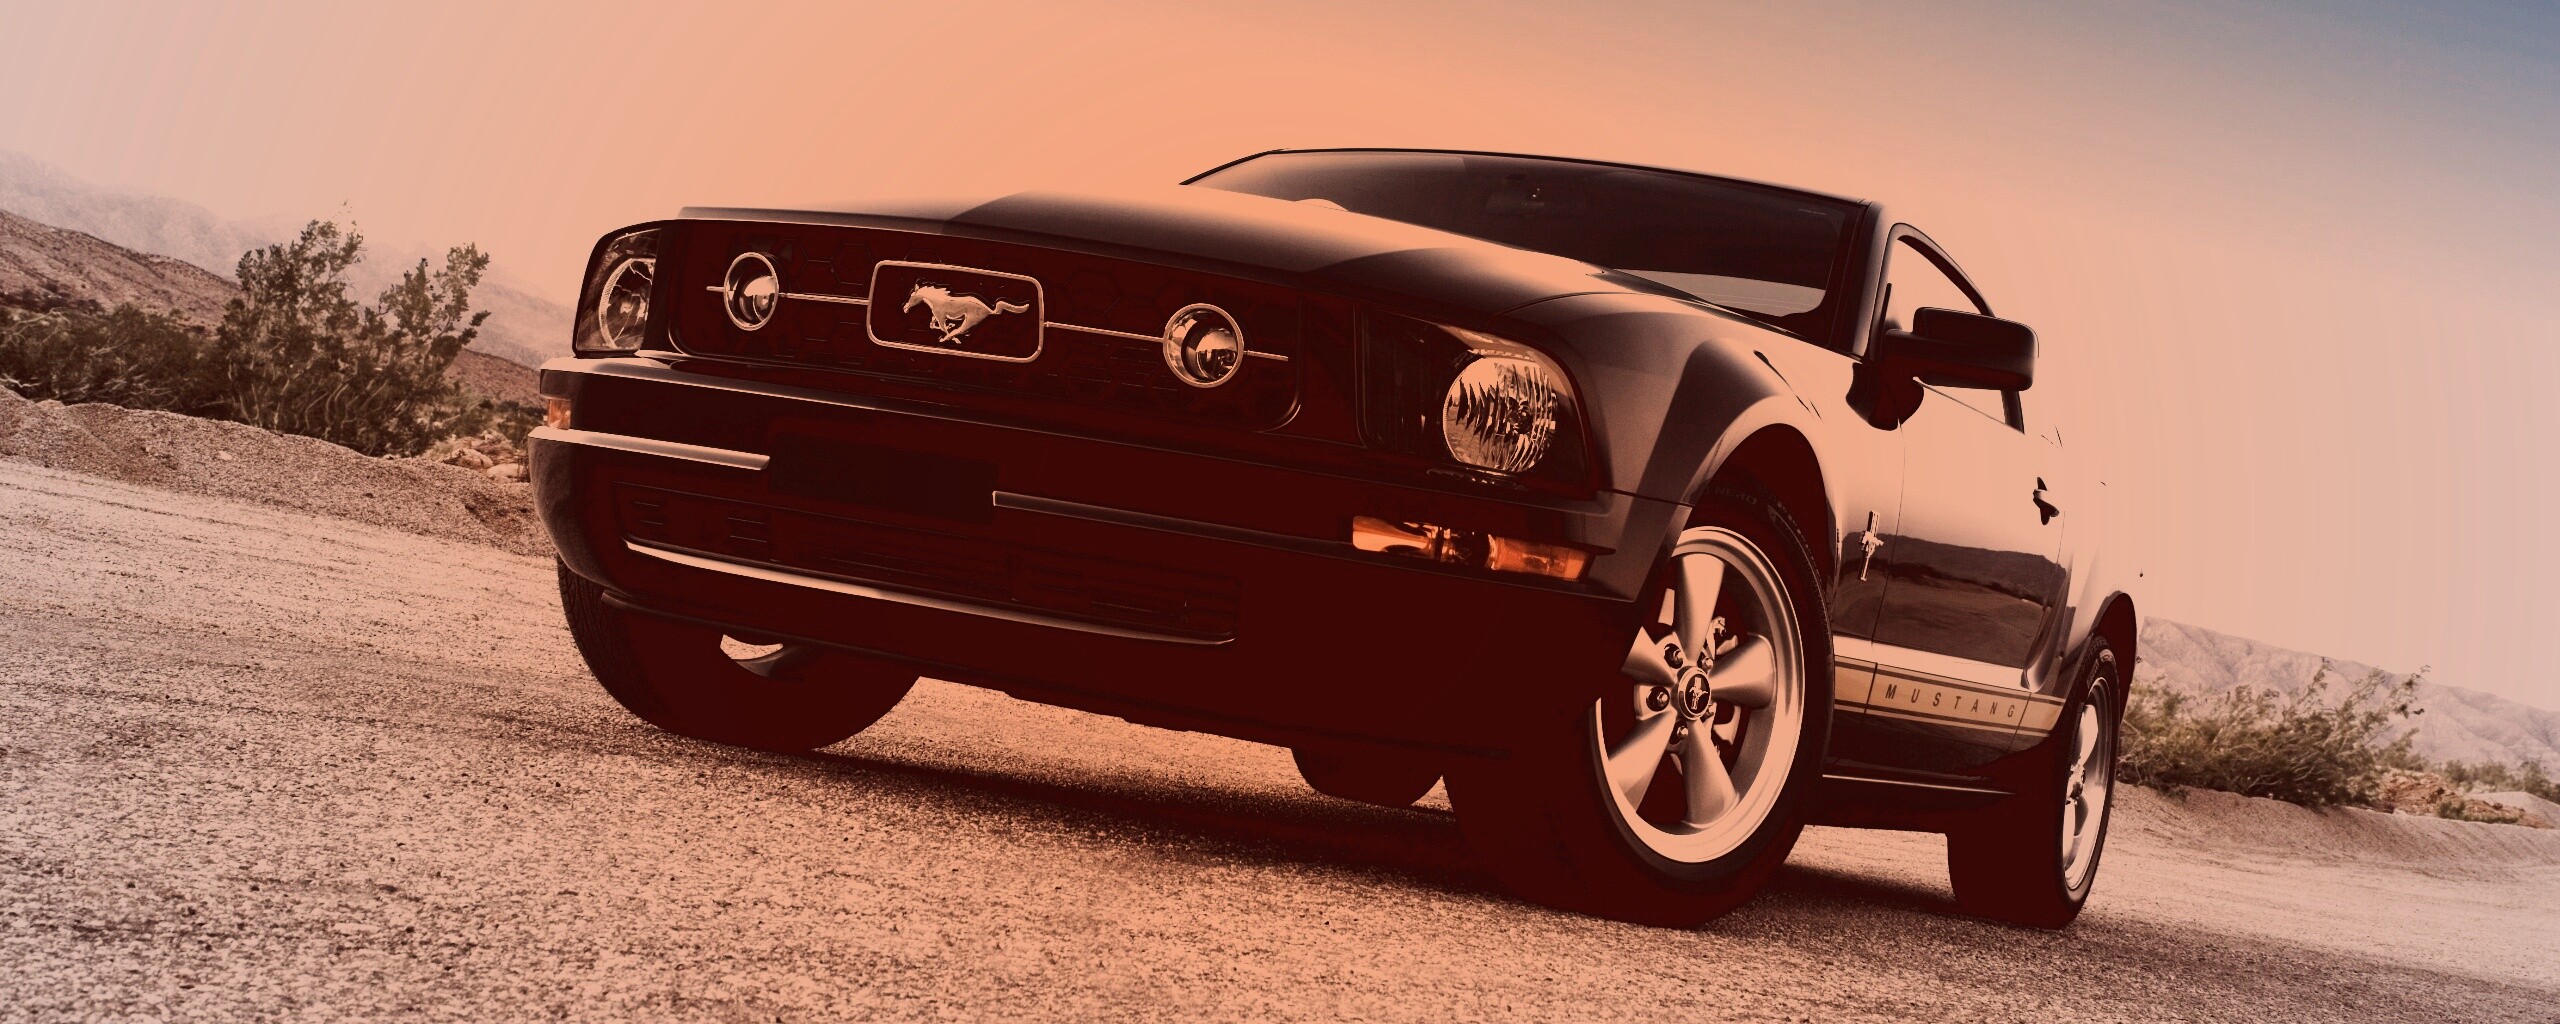 Ford Mustang дорога ночь без смс